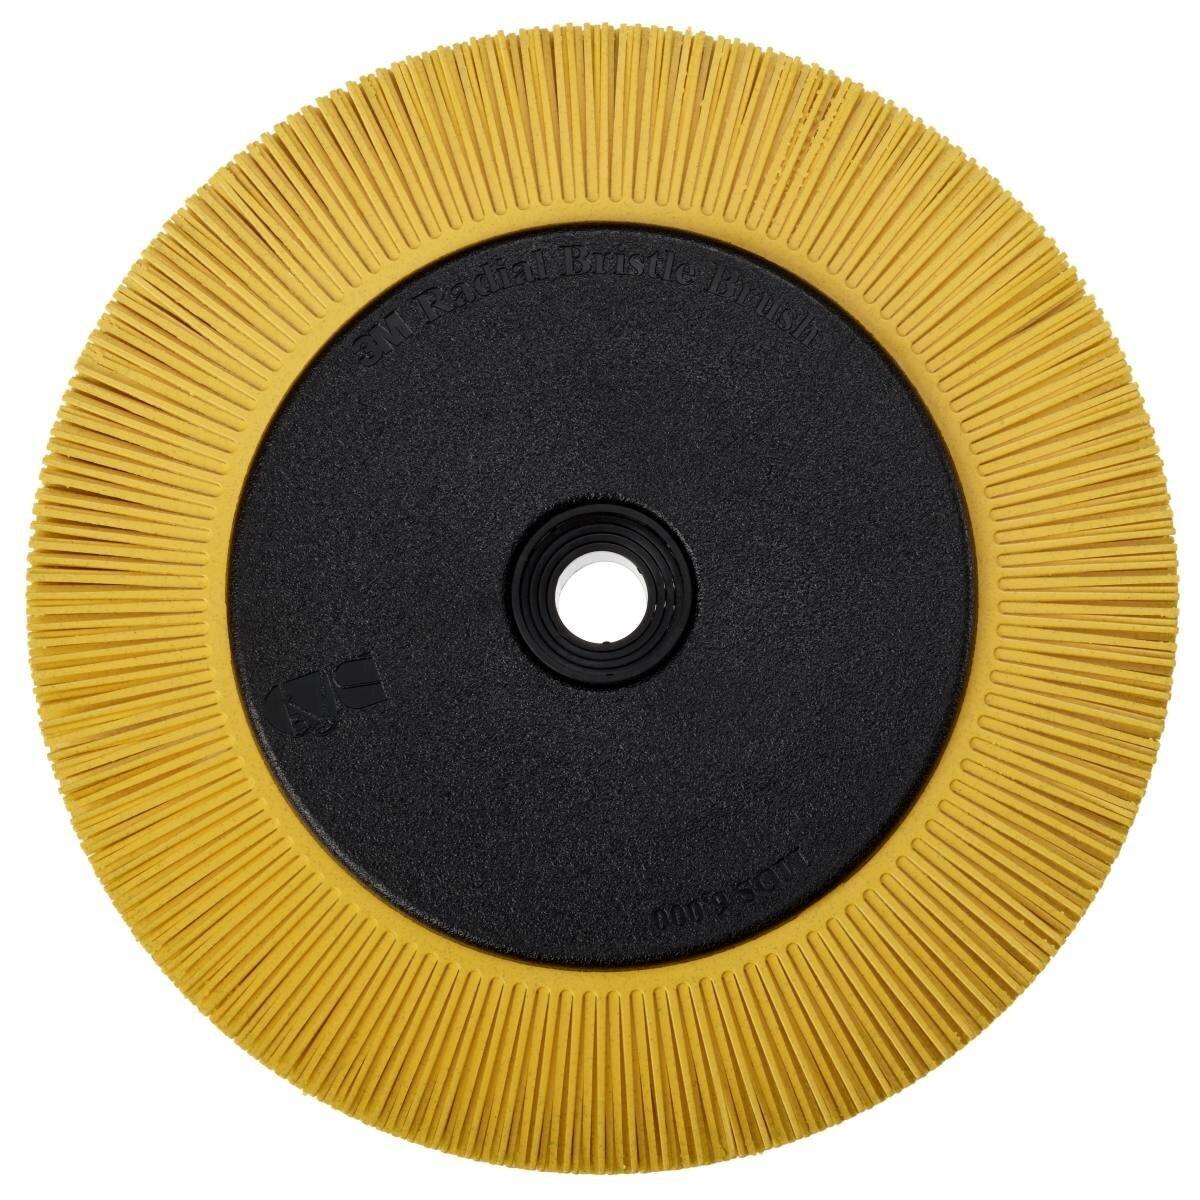 3M Scotch-Brite Radial Bristle Disc BB-ZB avec bride, jaune, 203,2 mm, P80, type S #33082